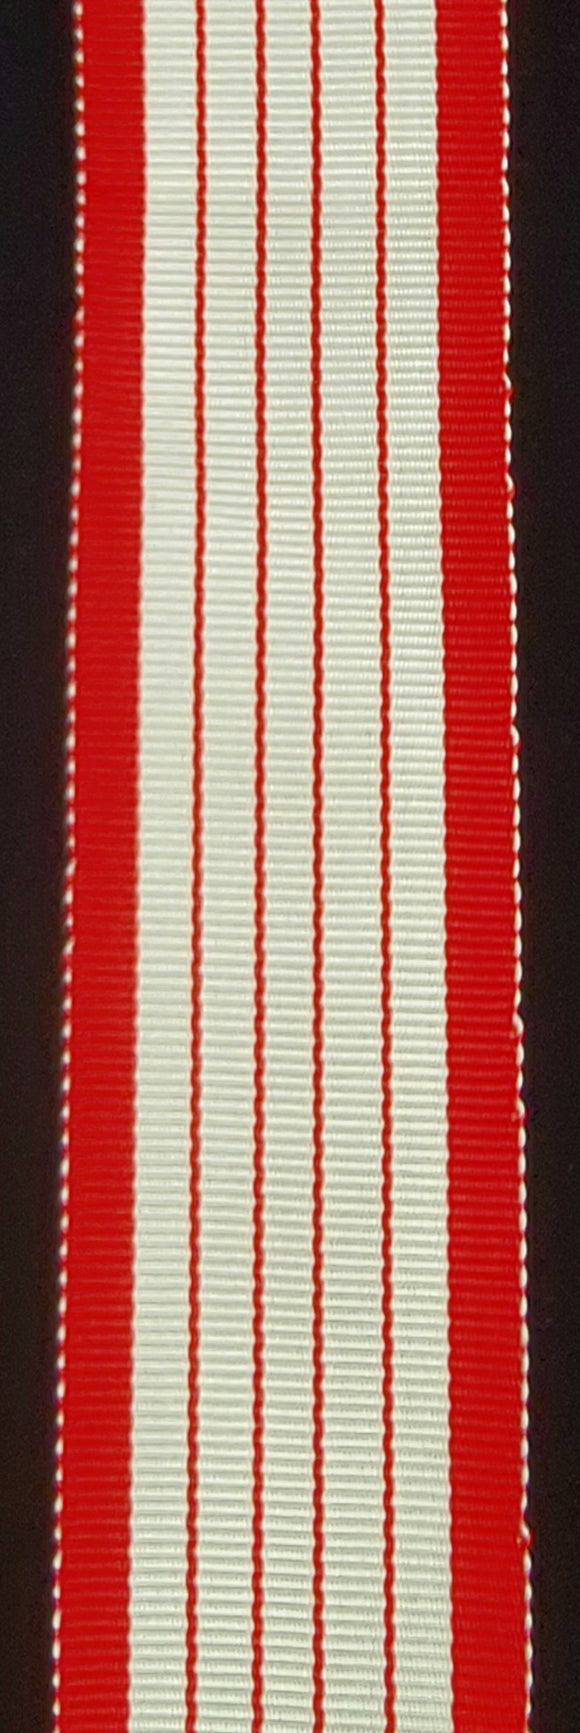 Ribbon, Canadian Centennial Medal 1967